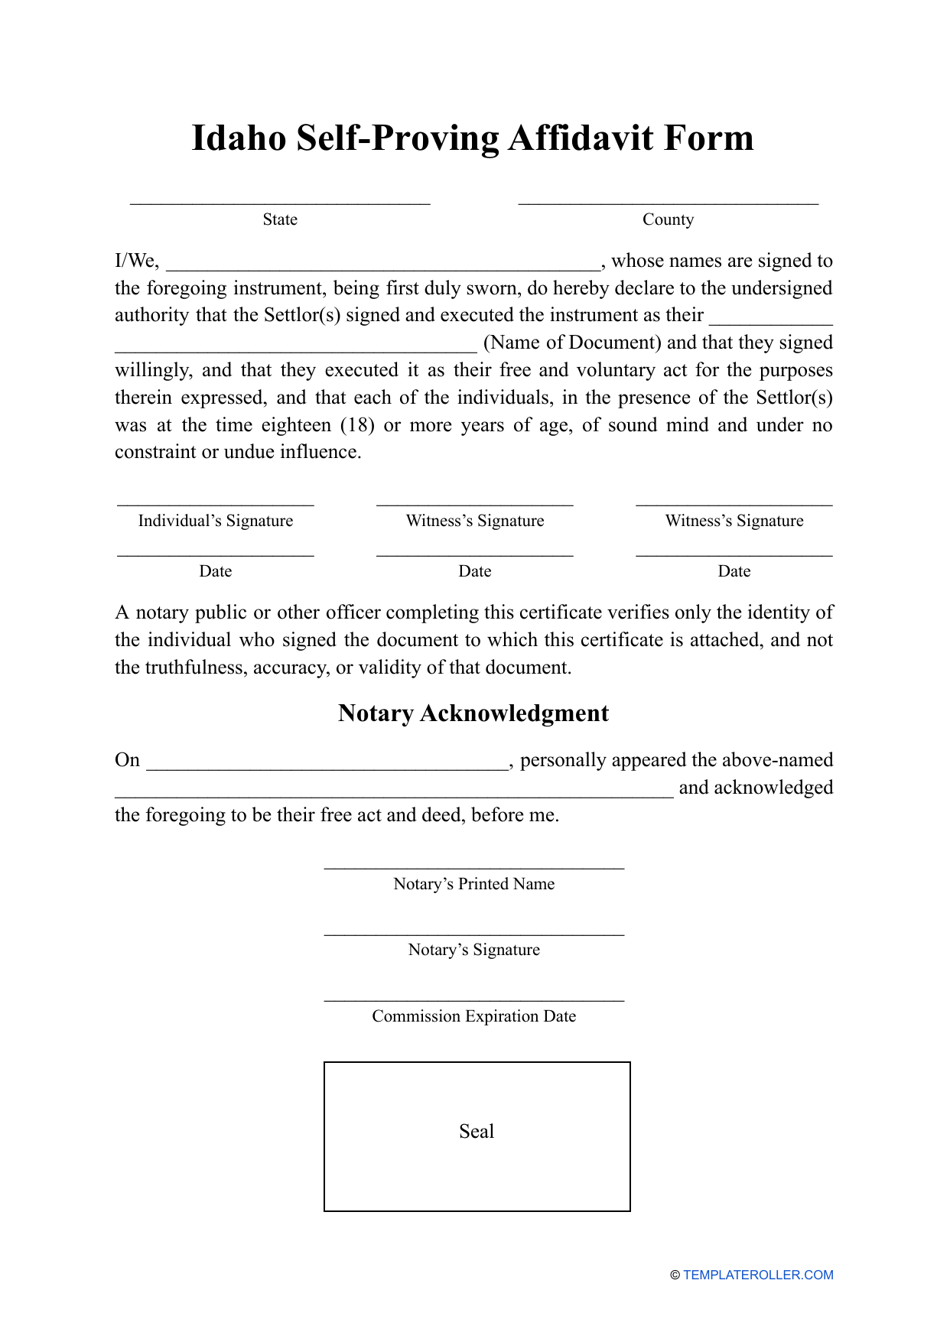 Self-proving Affidavit Form - Idaho, Page 1